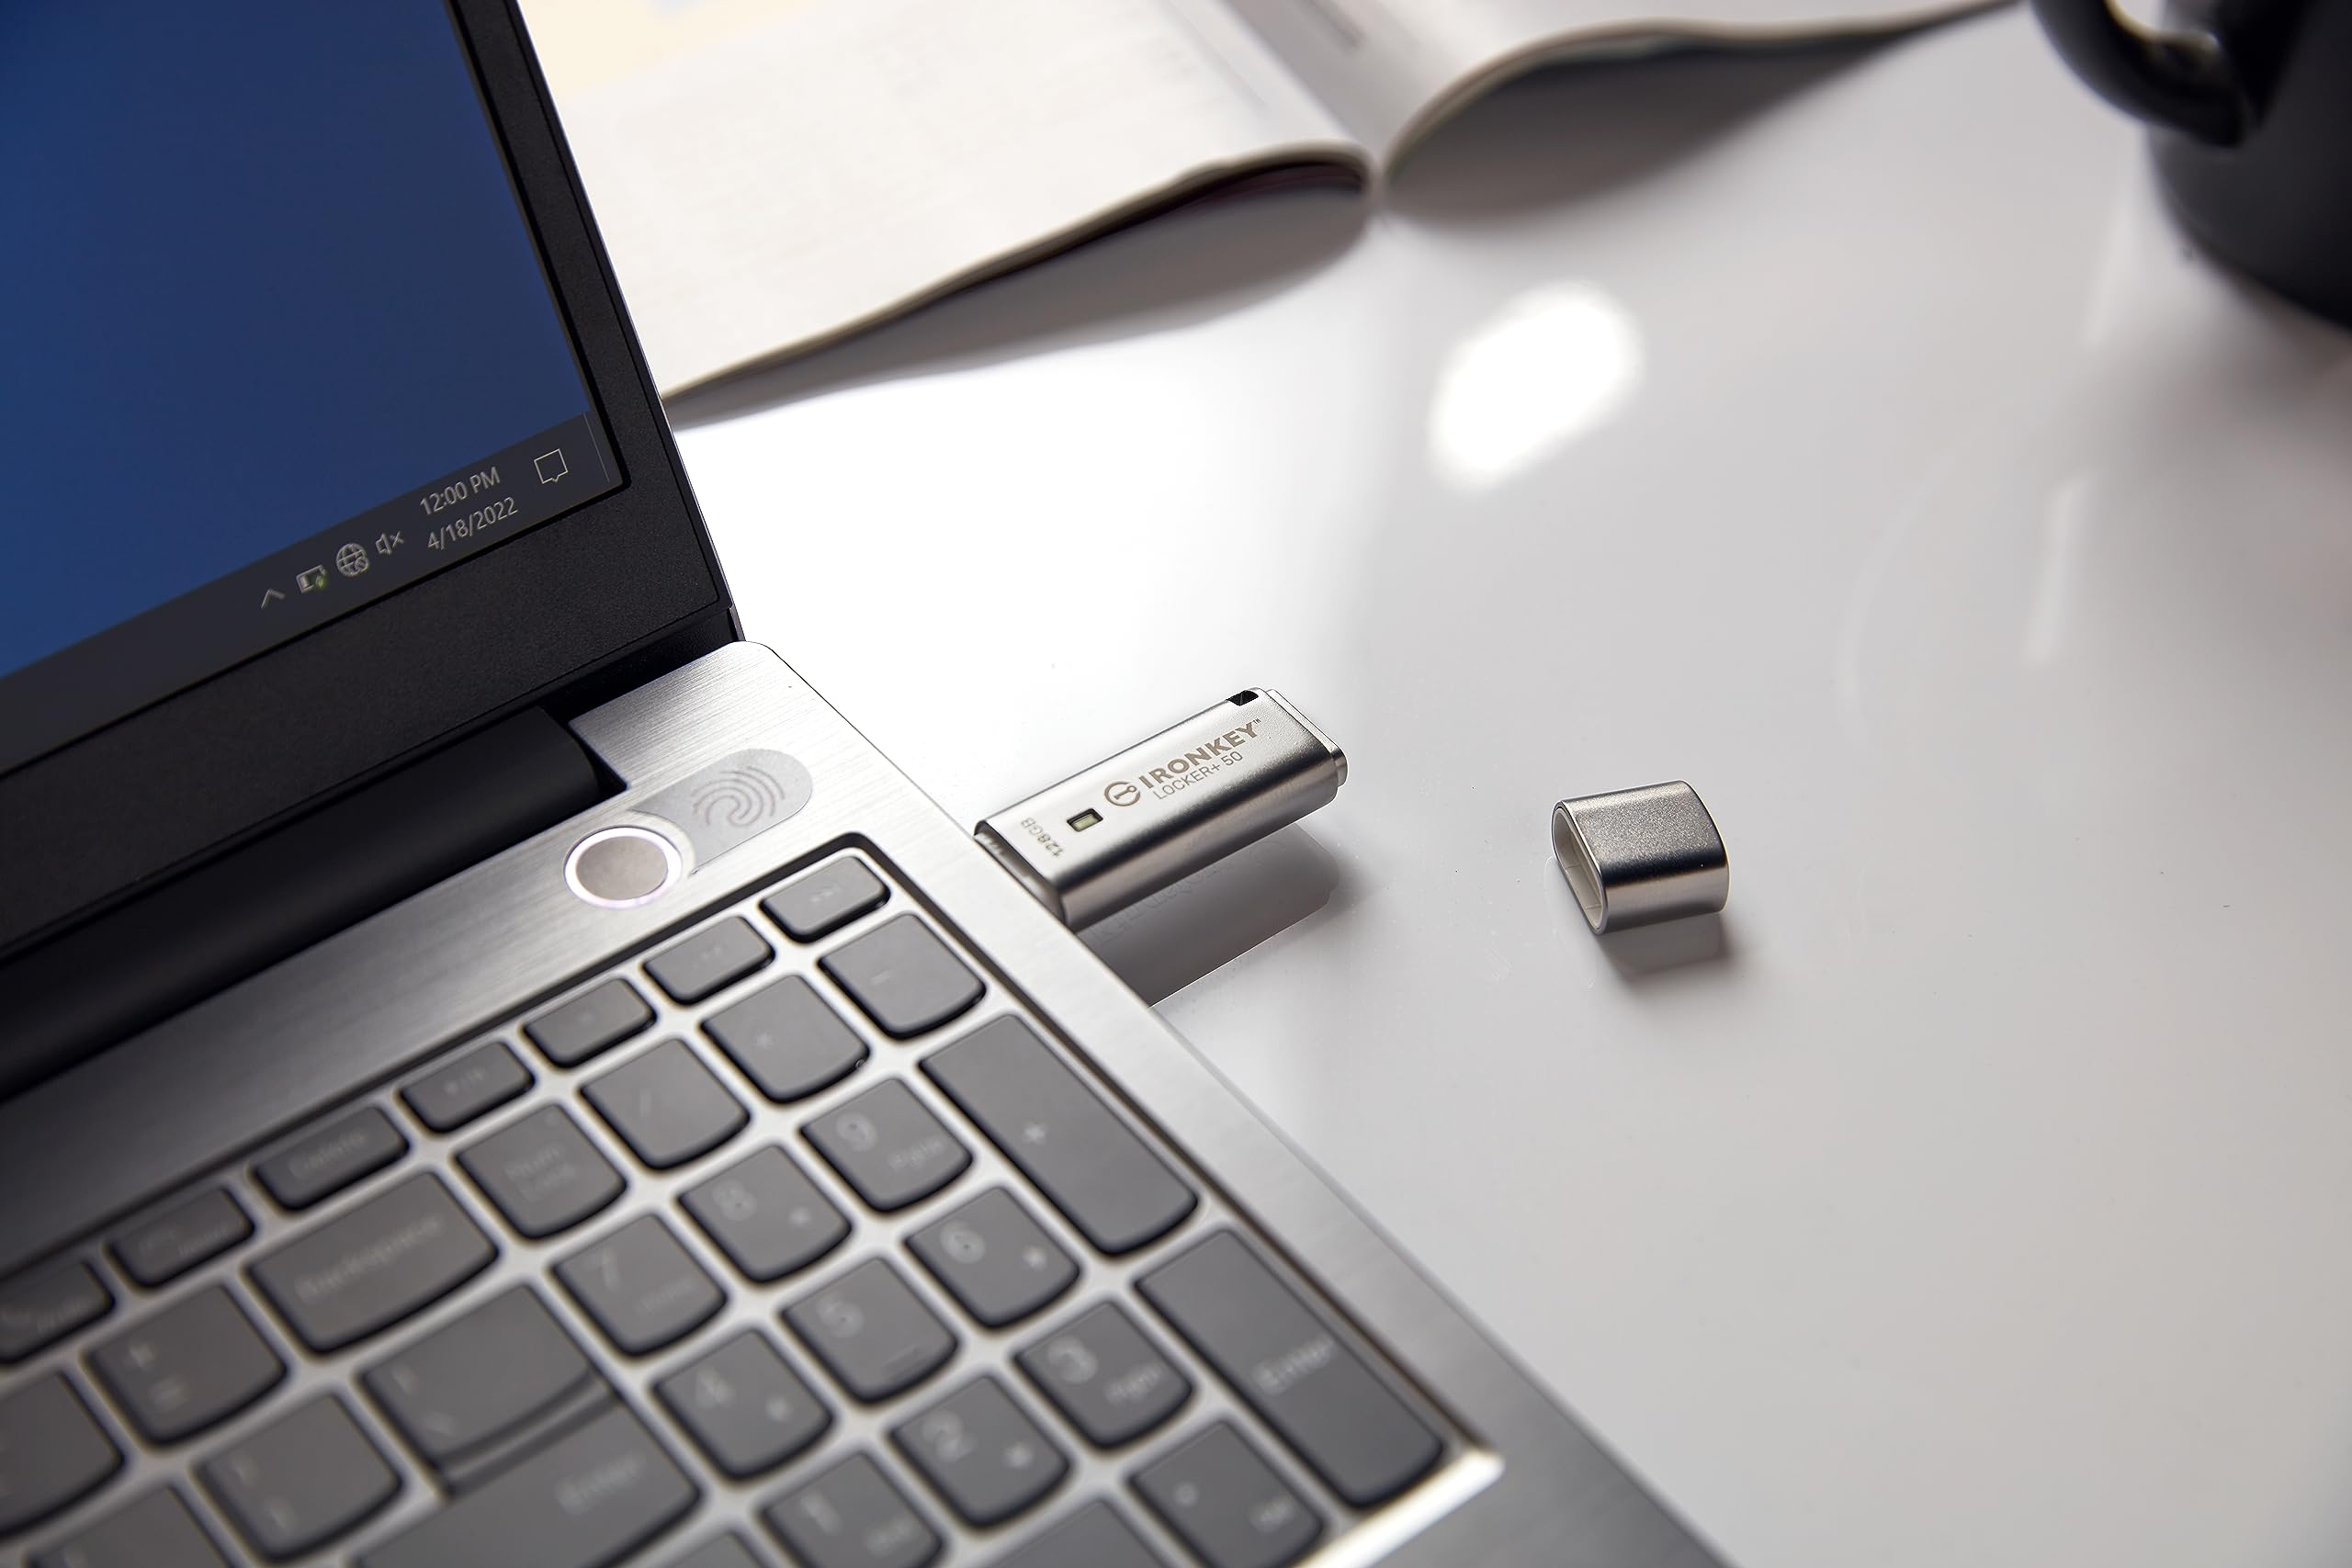 Kingston Ironkey Locker+ 50 64GB Encrypted USB Flash Drive | USB 3.2 Gen 1 | XTS-AES Protection & TAA Compliant | Multi-Password Security Options | Automatic Cloud Backup | Metal Casing | IKLP50/64GB